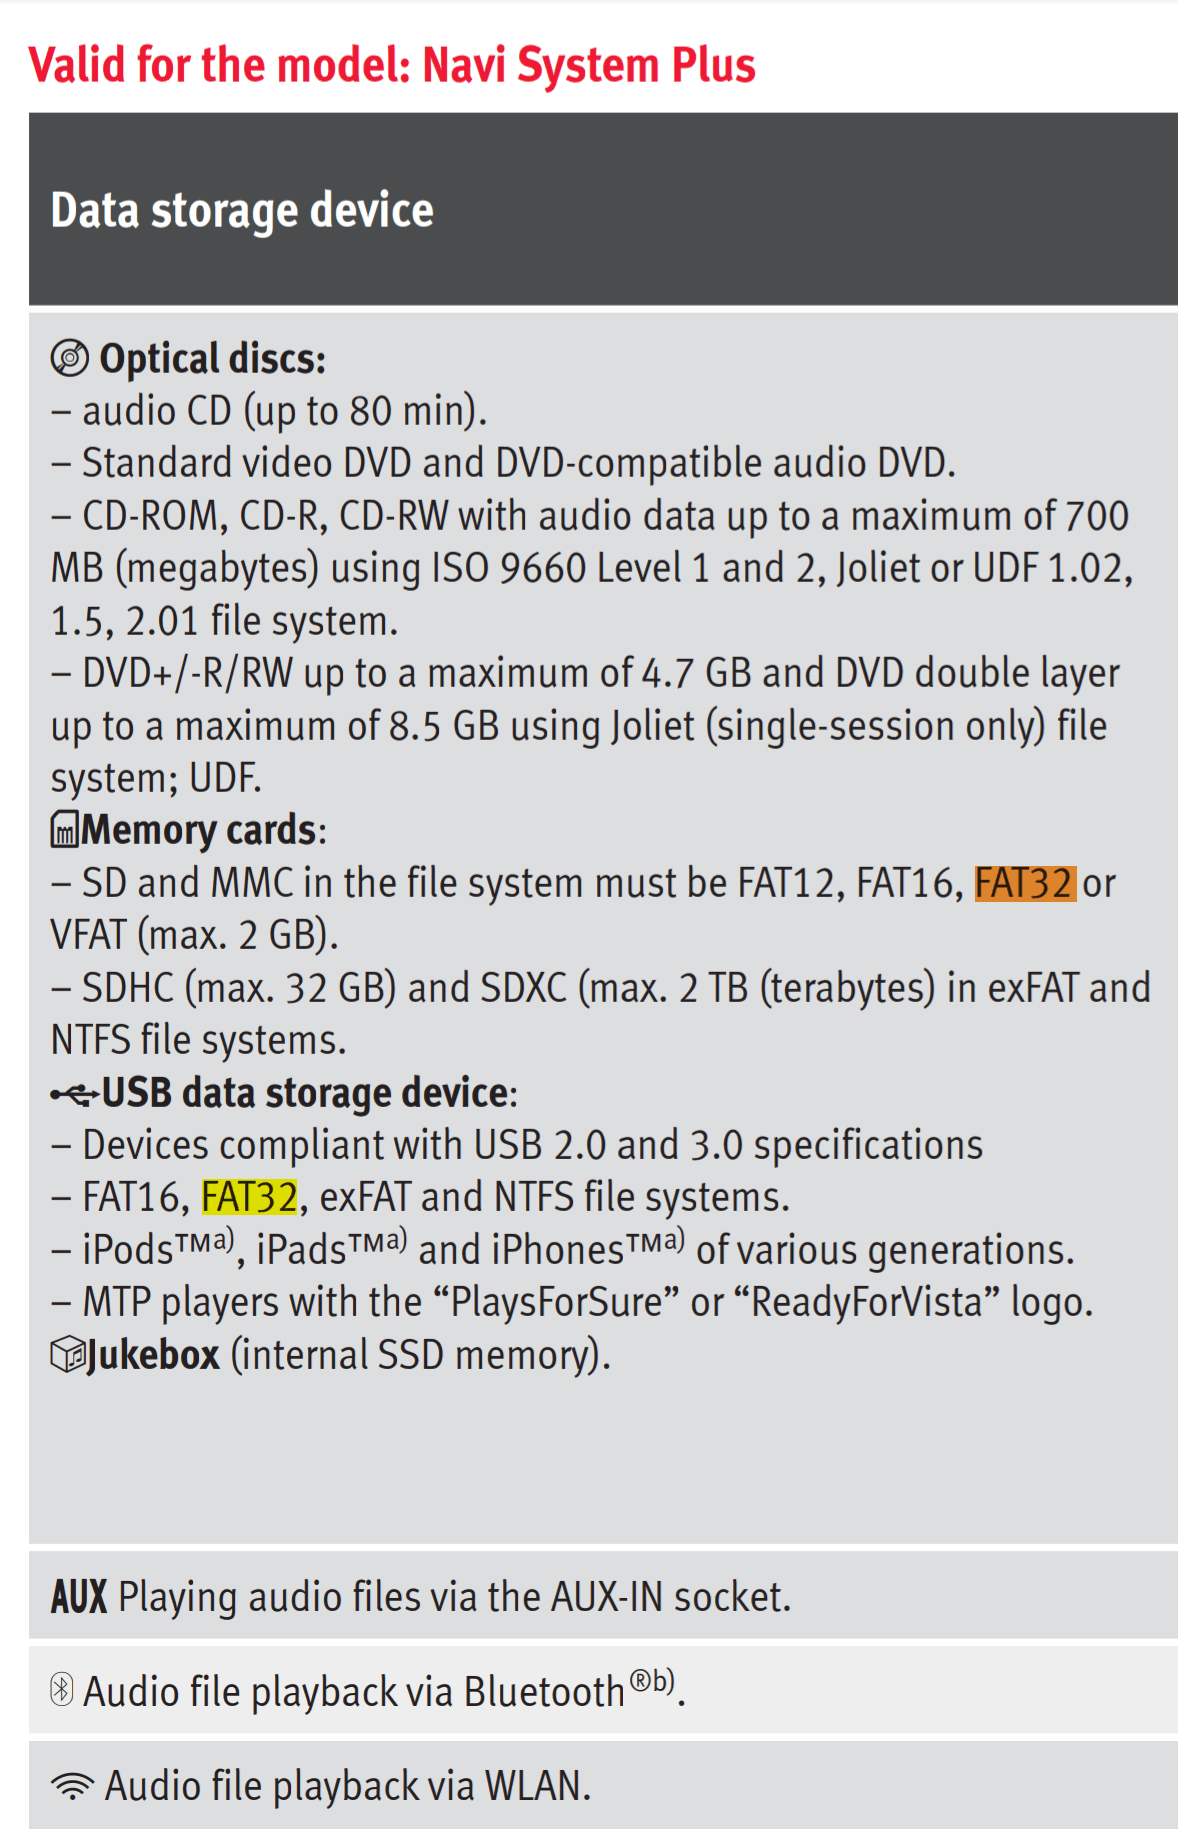 USB KEY VW 32GB file system FAT32, NTFS ideal for offer